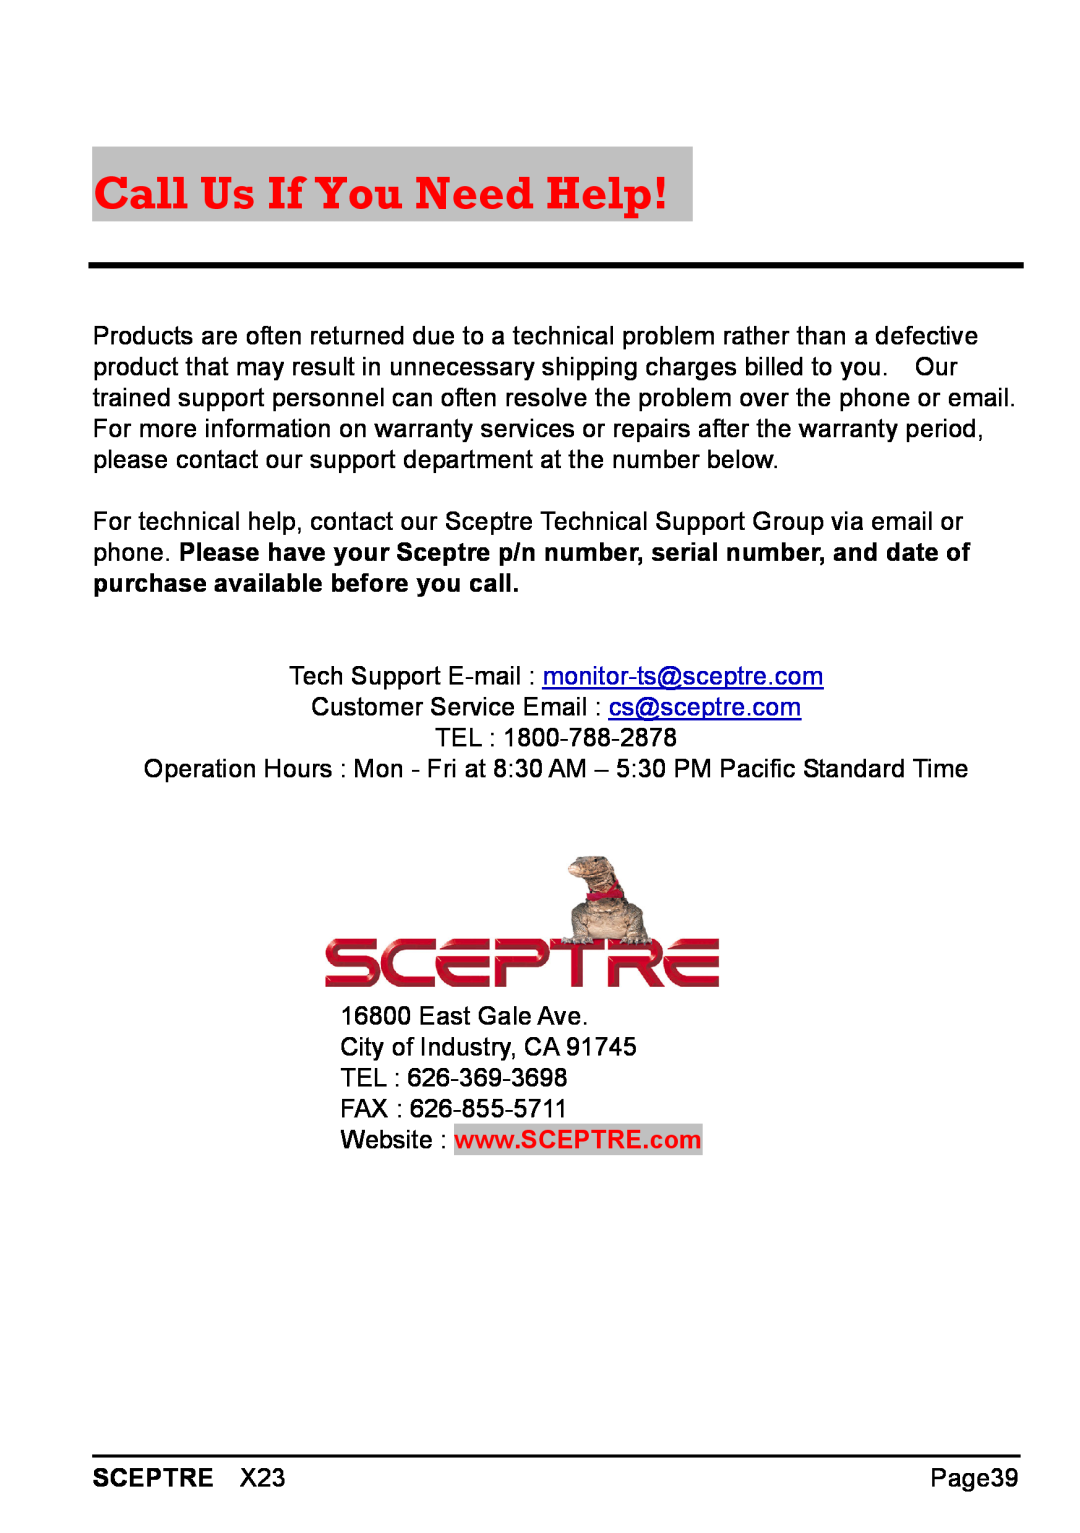 Sceptre Technologies X23 warranty Call Us If You Need Help 